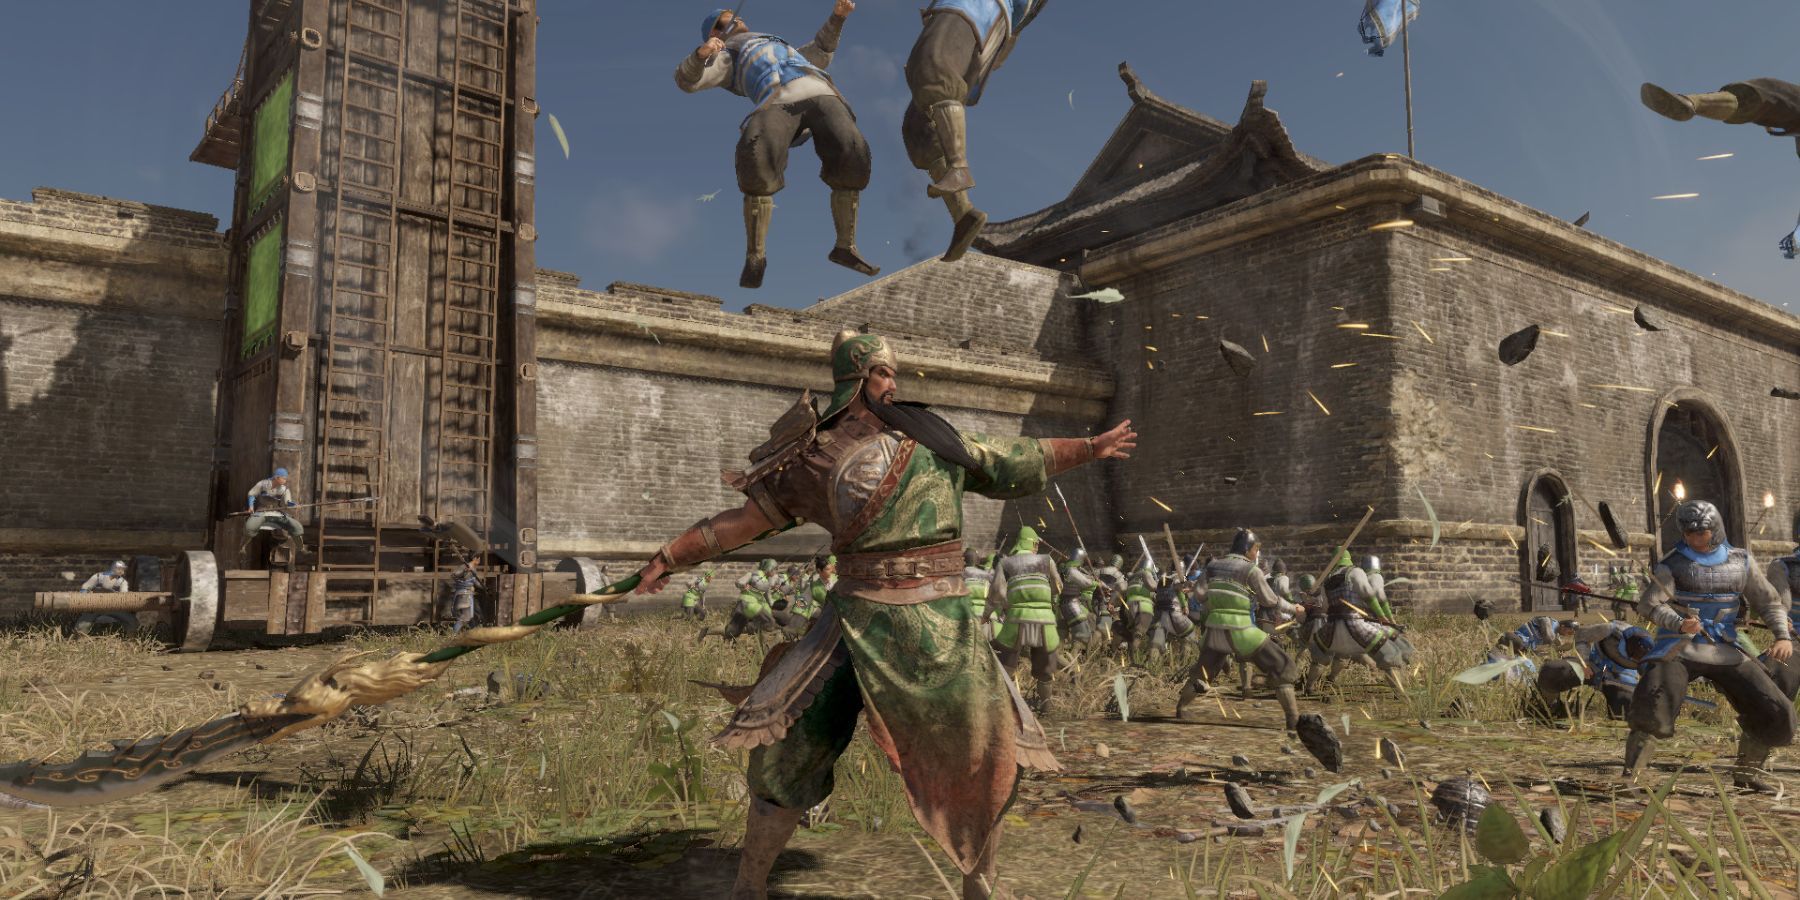 Guan Yu striking enemies